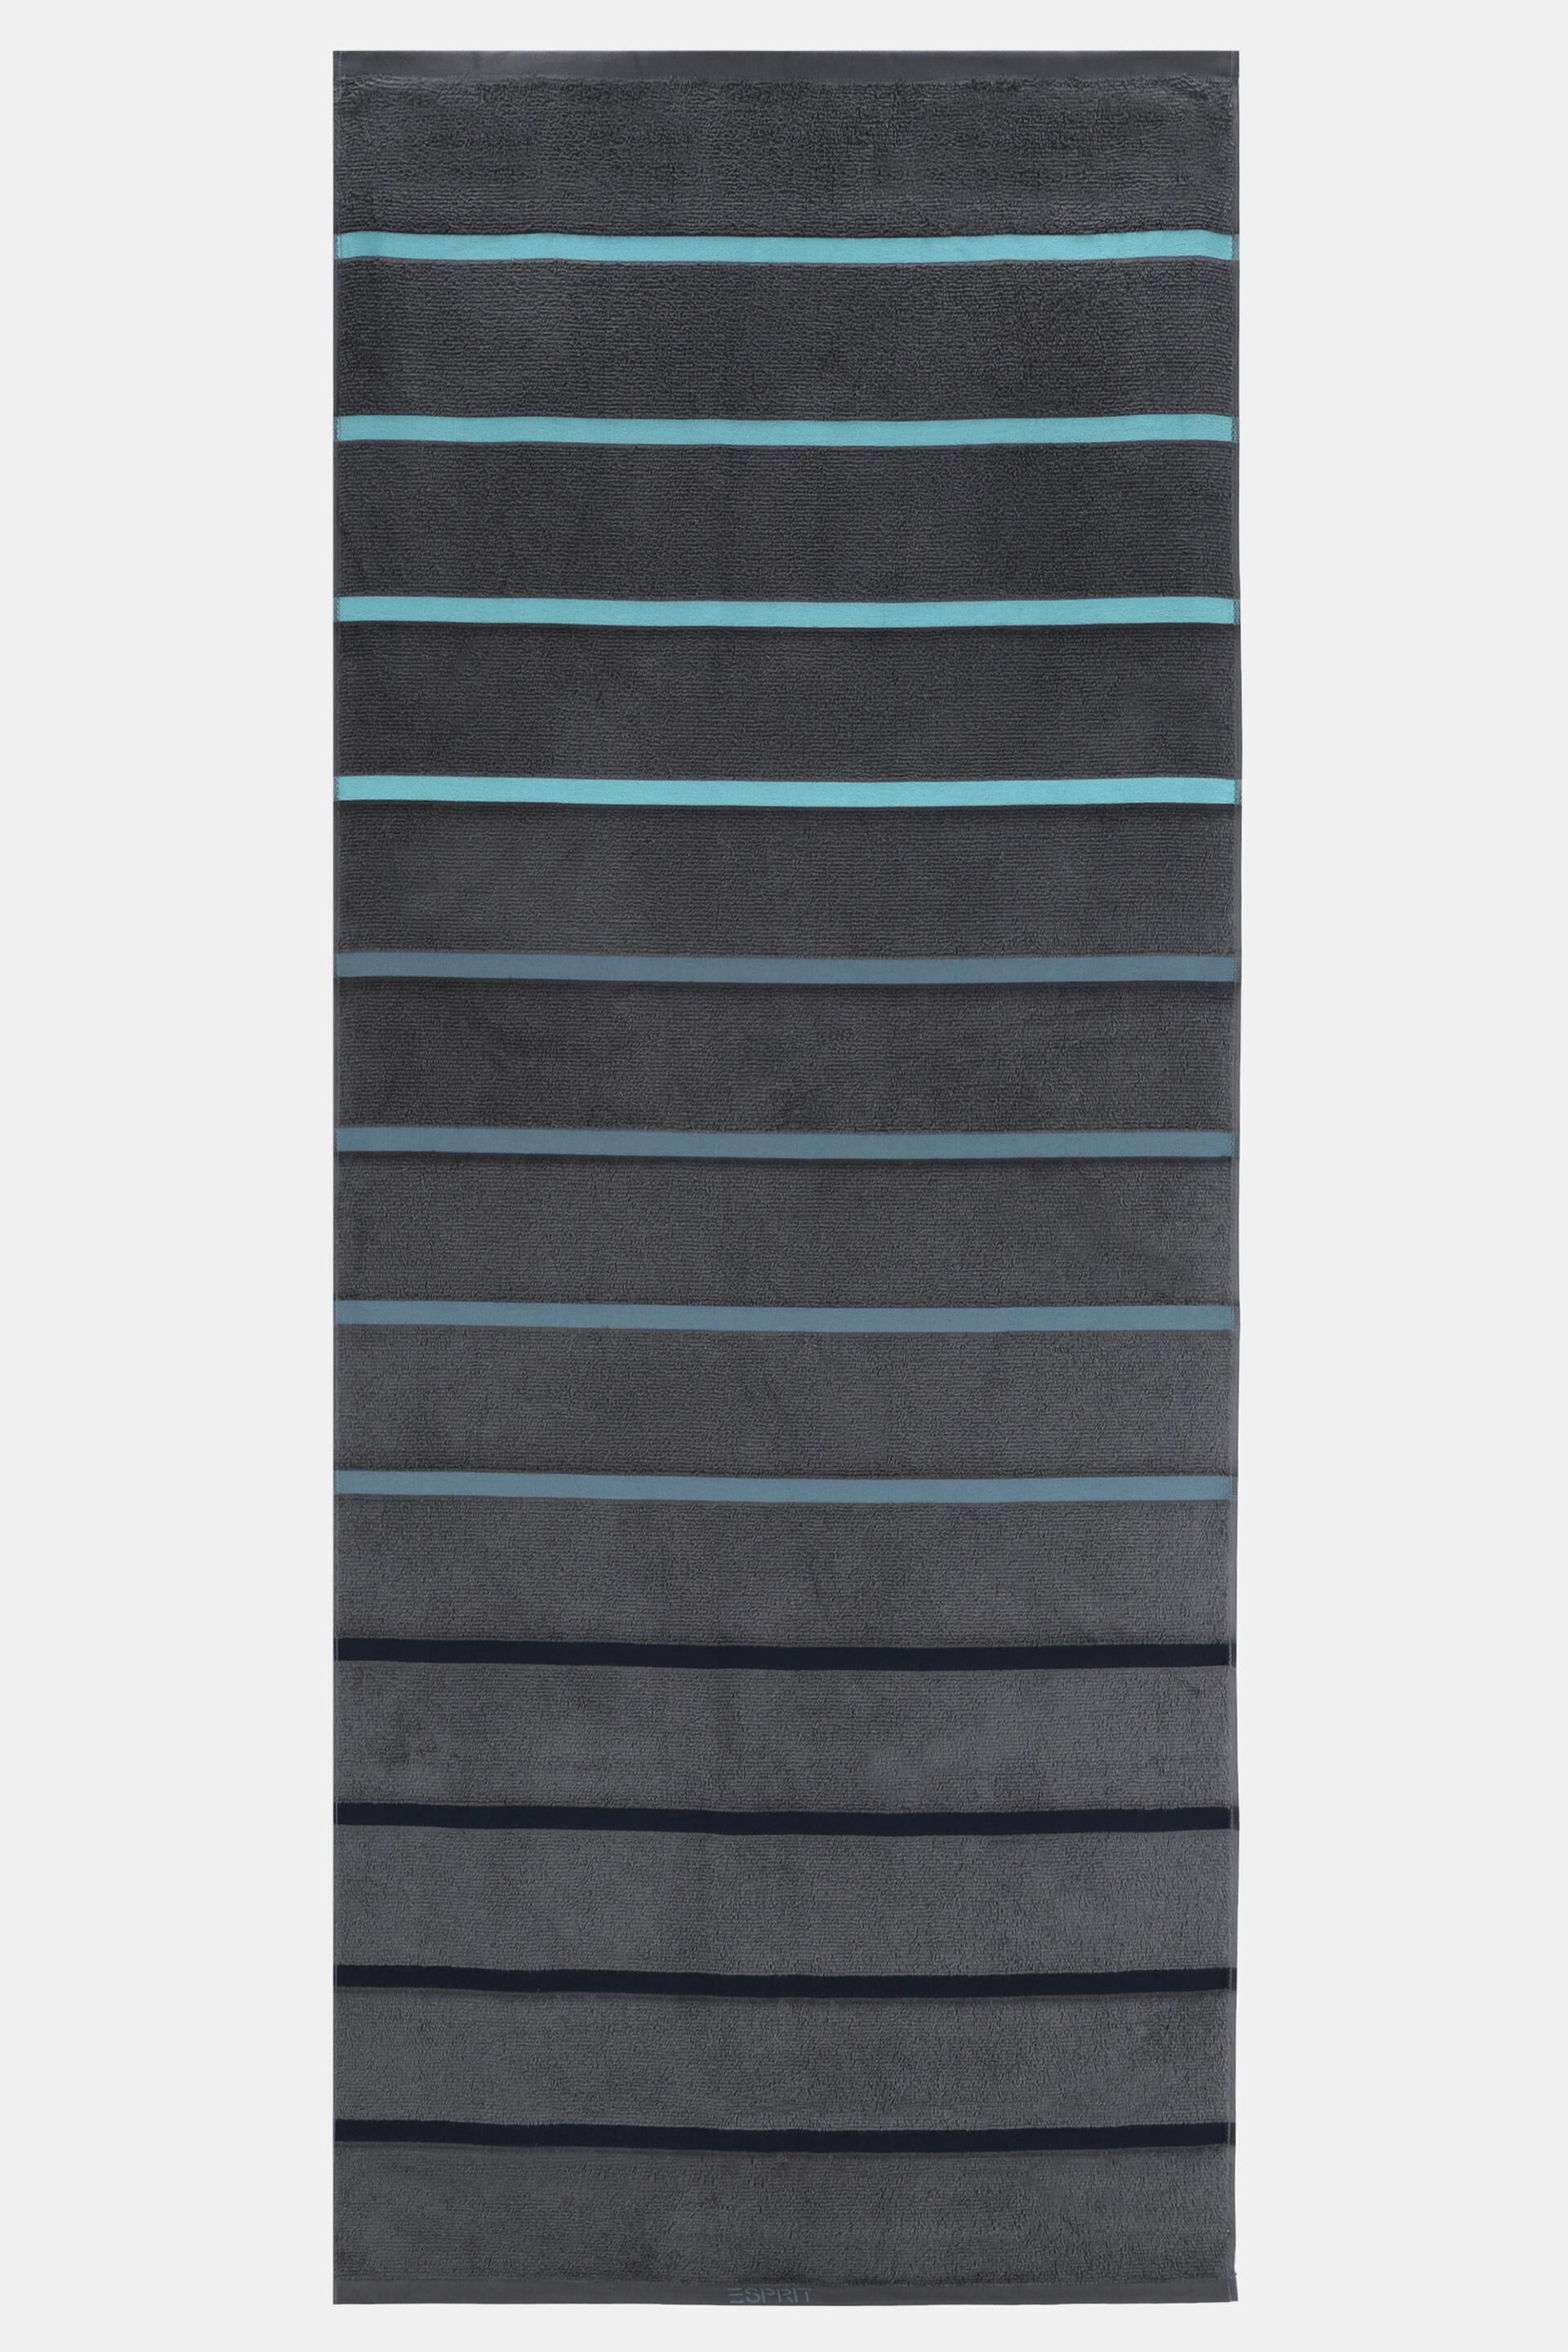 Esprit stripes towel sauna Relax with